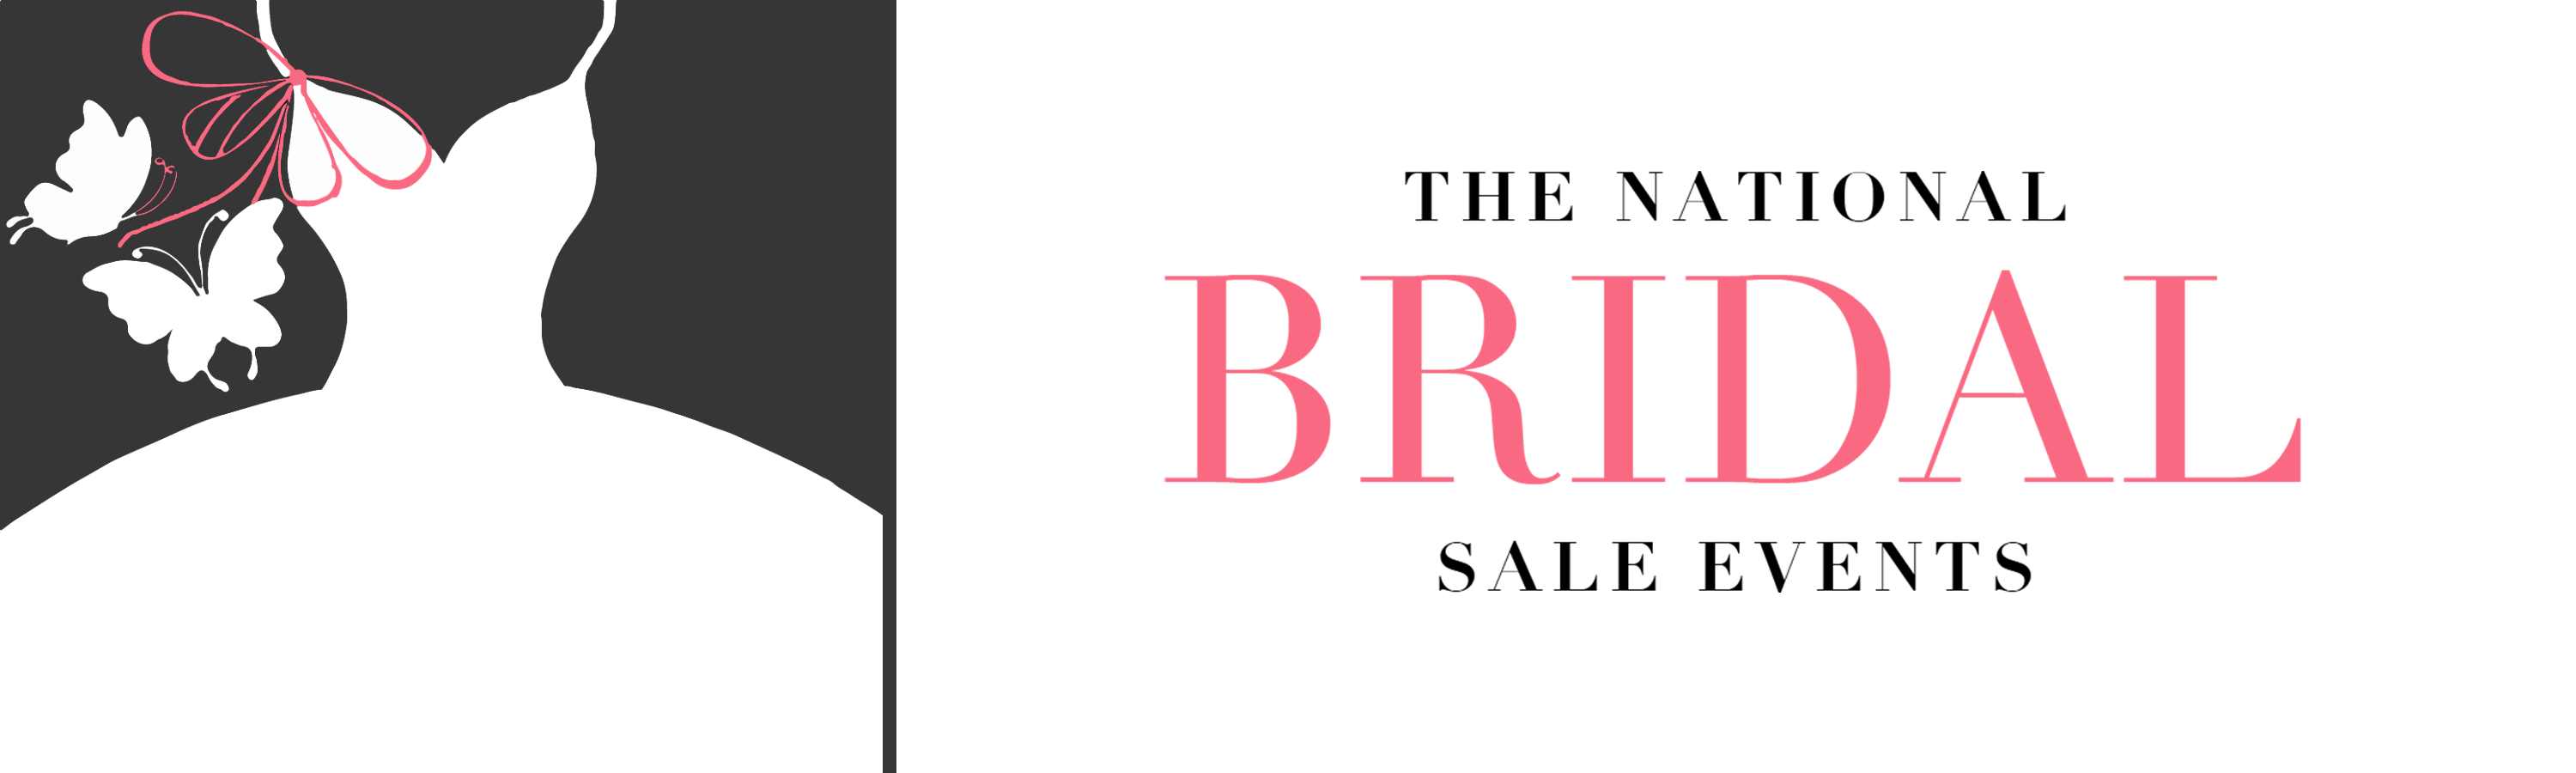 National Bridal Sale Event at Bella Bridal Gallery Image